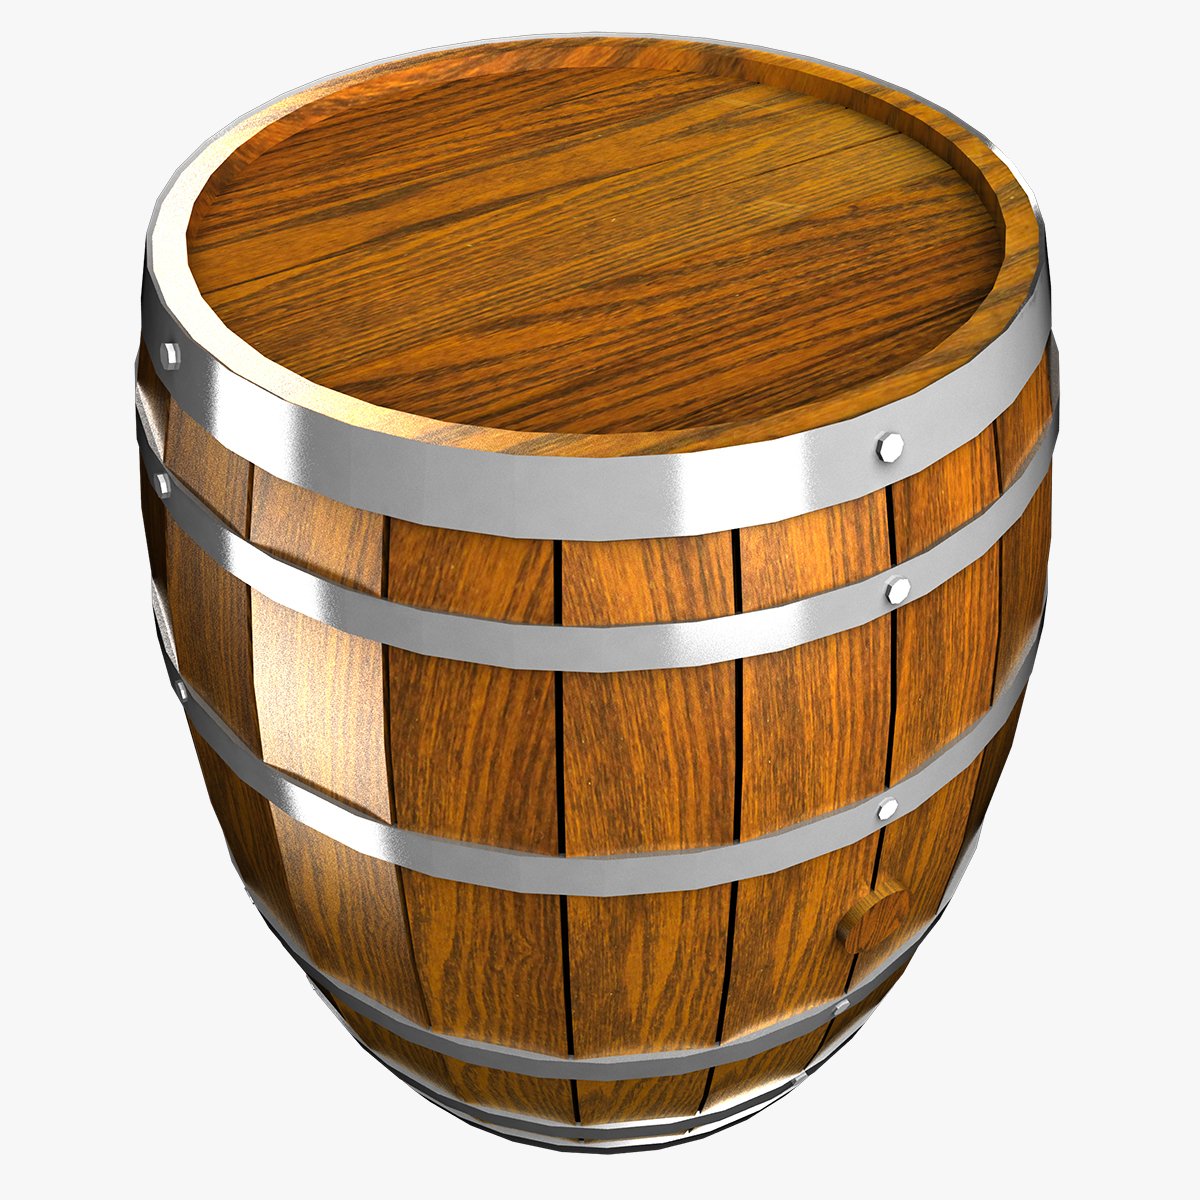 wine barrel top image clipart